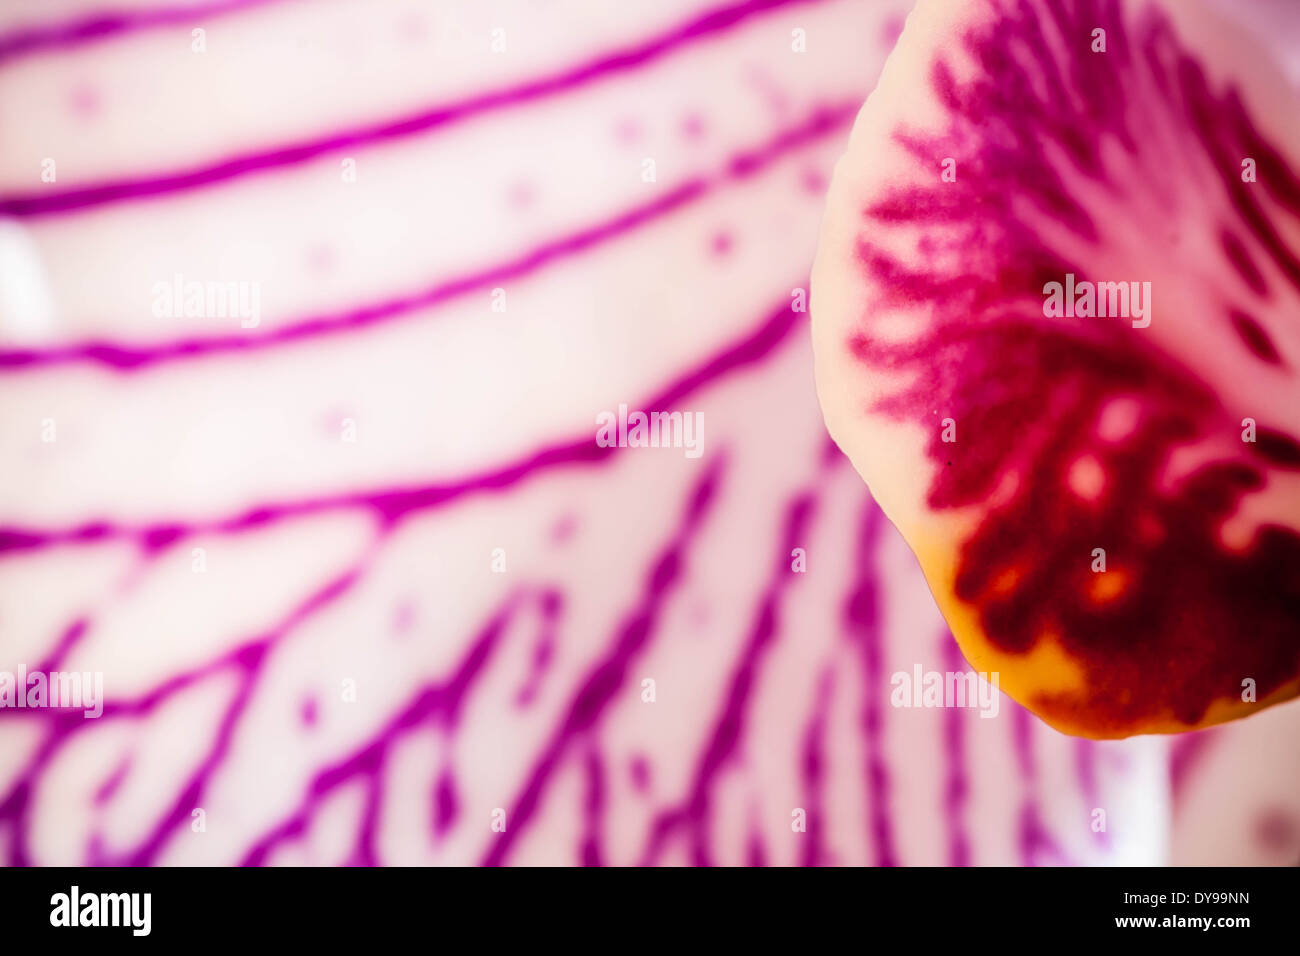 Striped Phalaenopsis Orchid flower close-up macro image Stock Photo